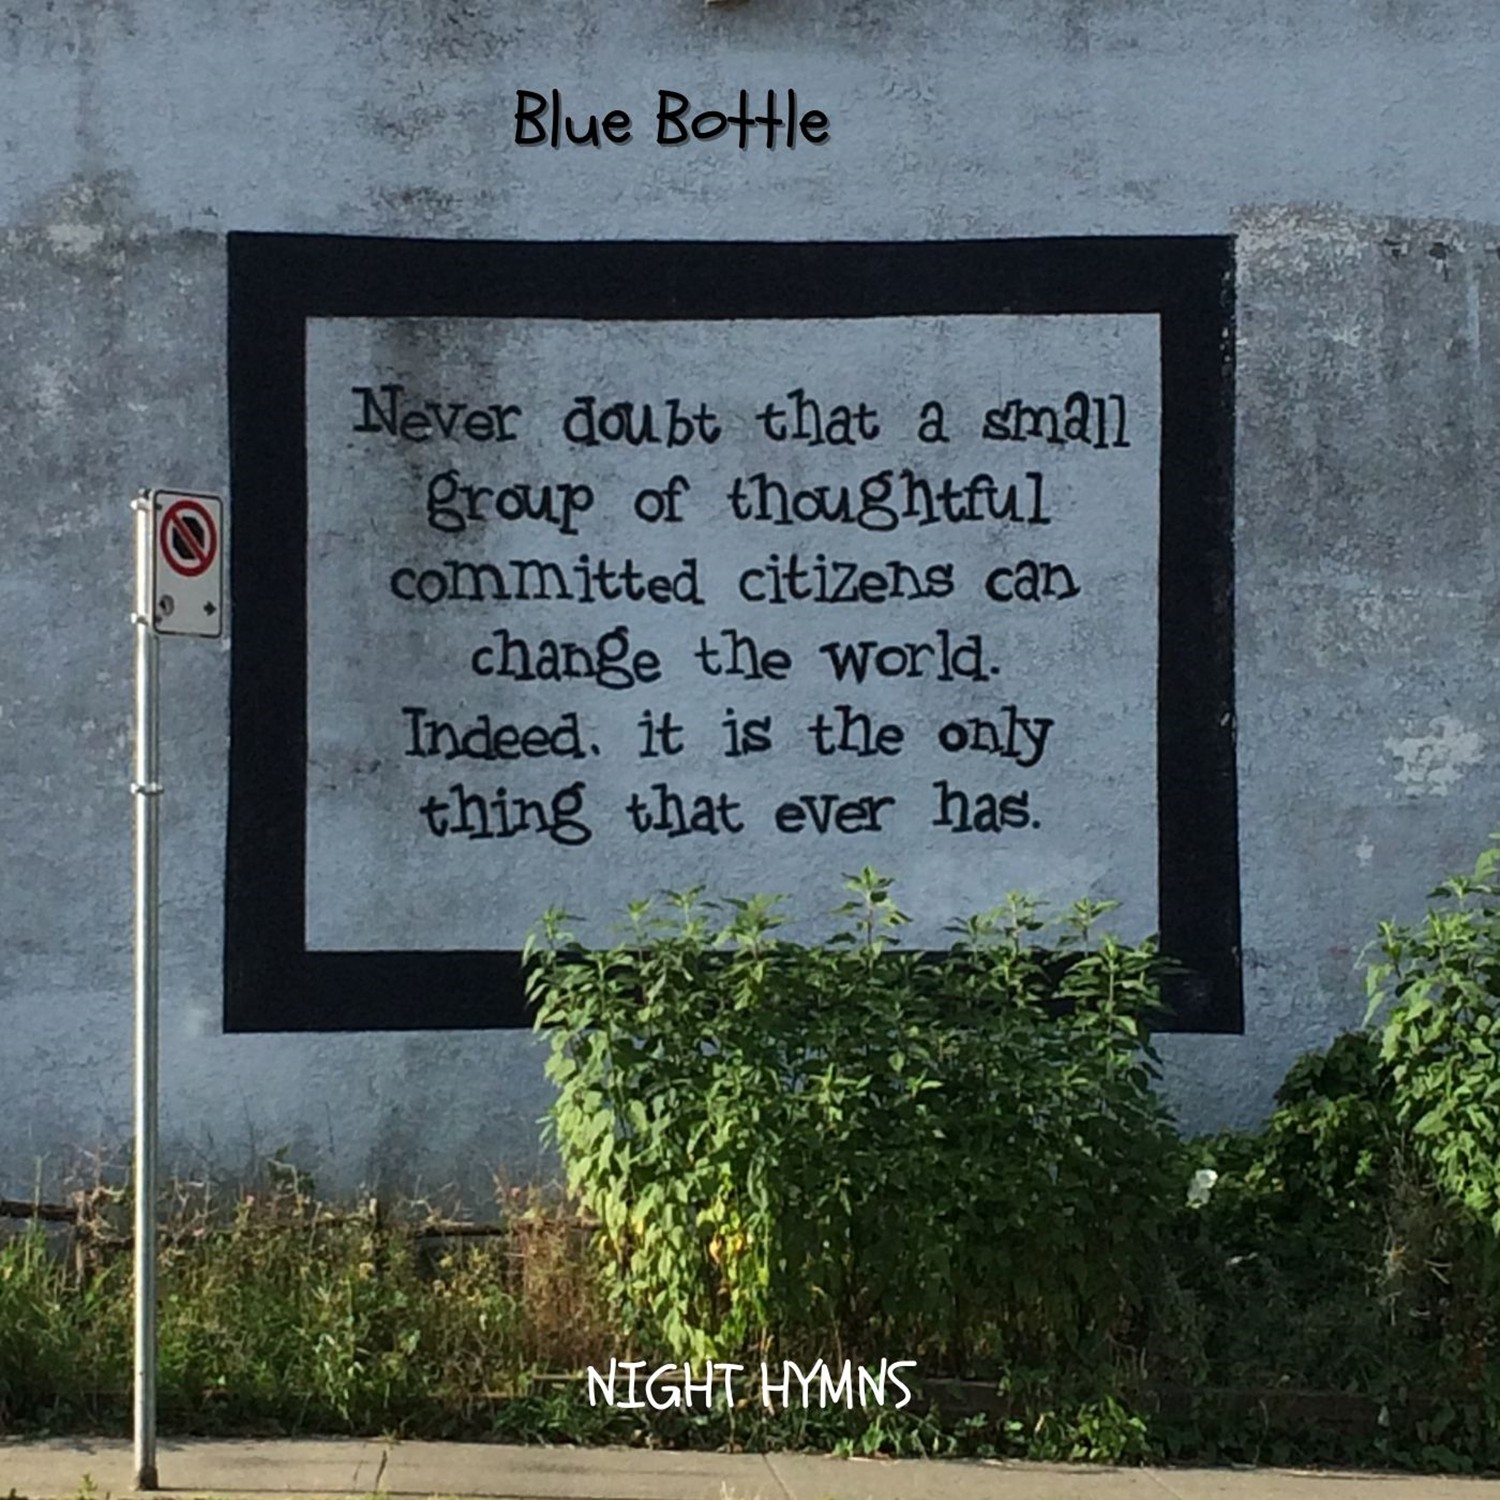 Night Hymns “Blue Bottle” single artwork